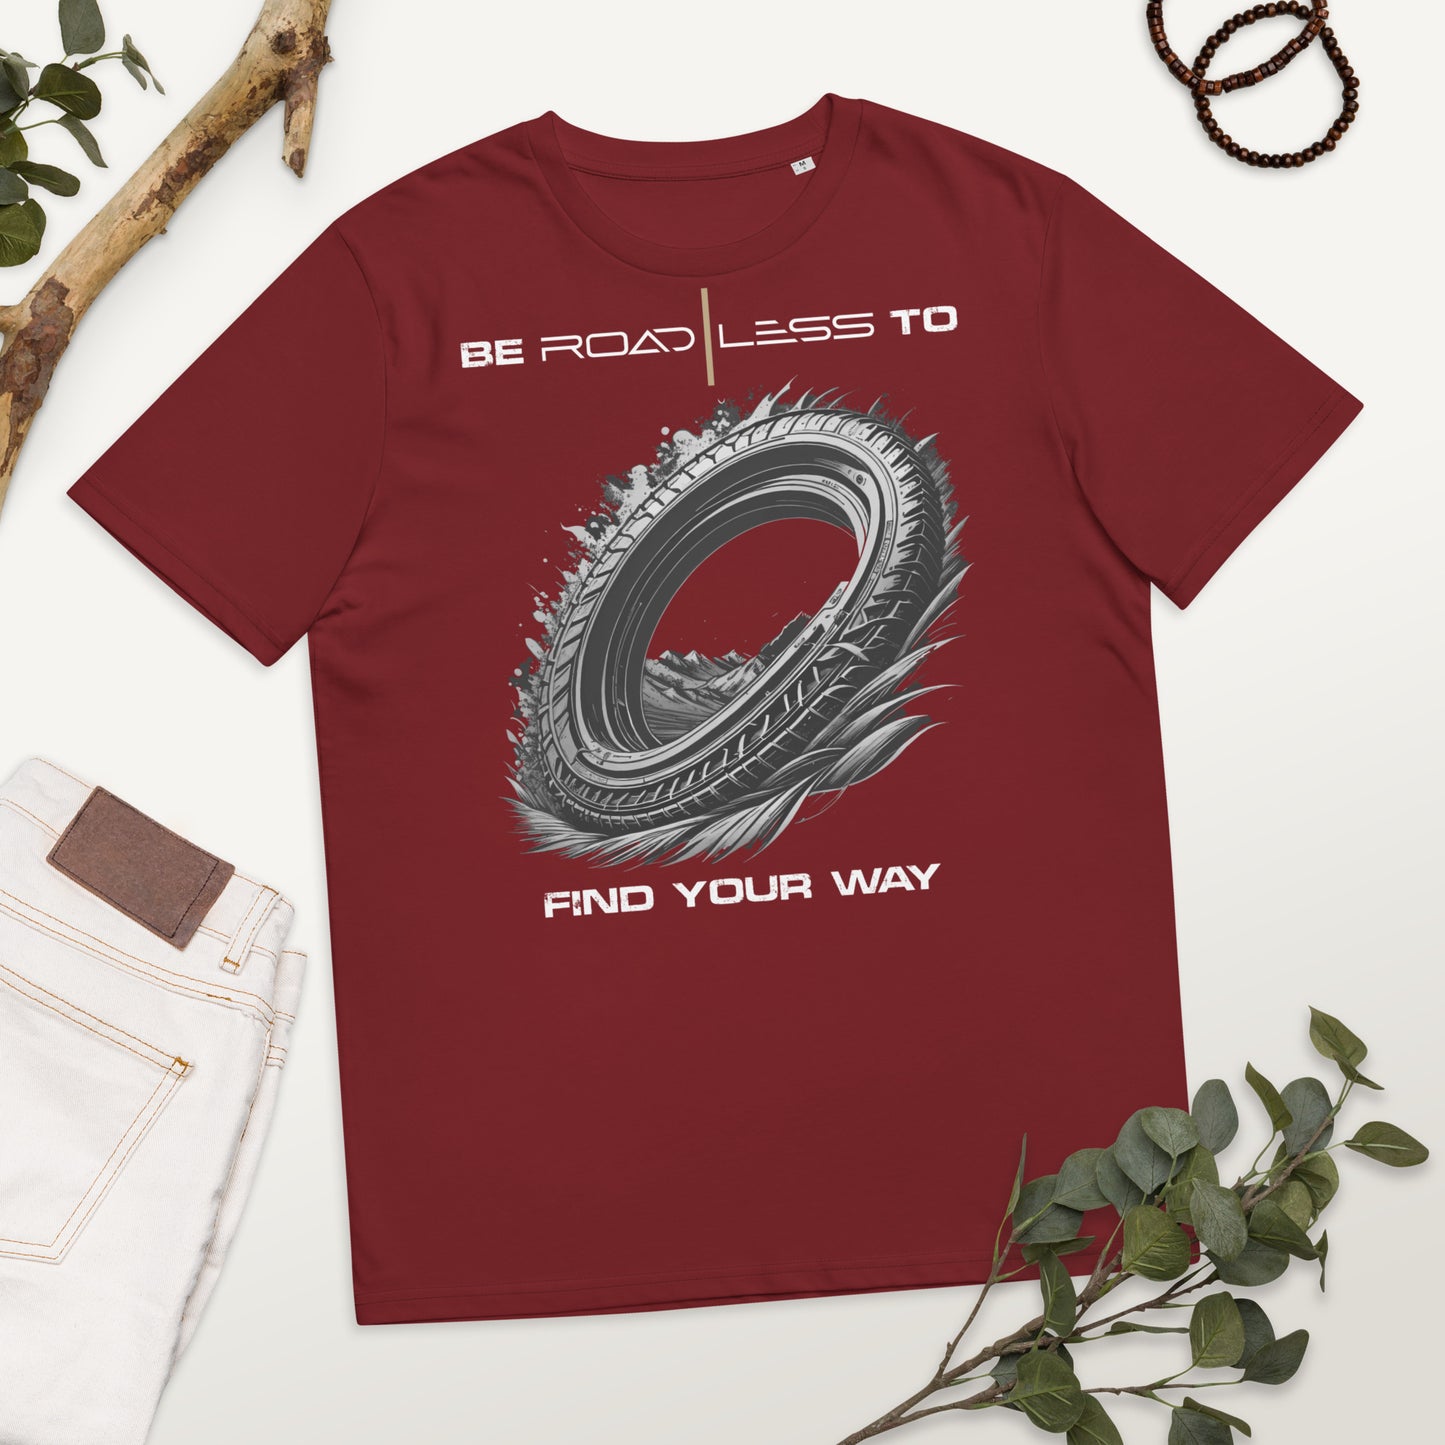 Unisex-Bio-Baumwoll-T-Shirt (Be Road Less to...)